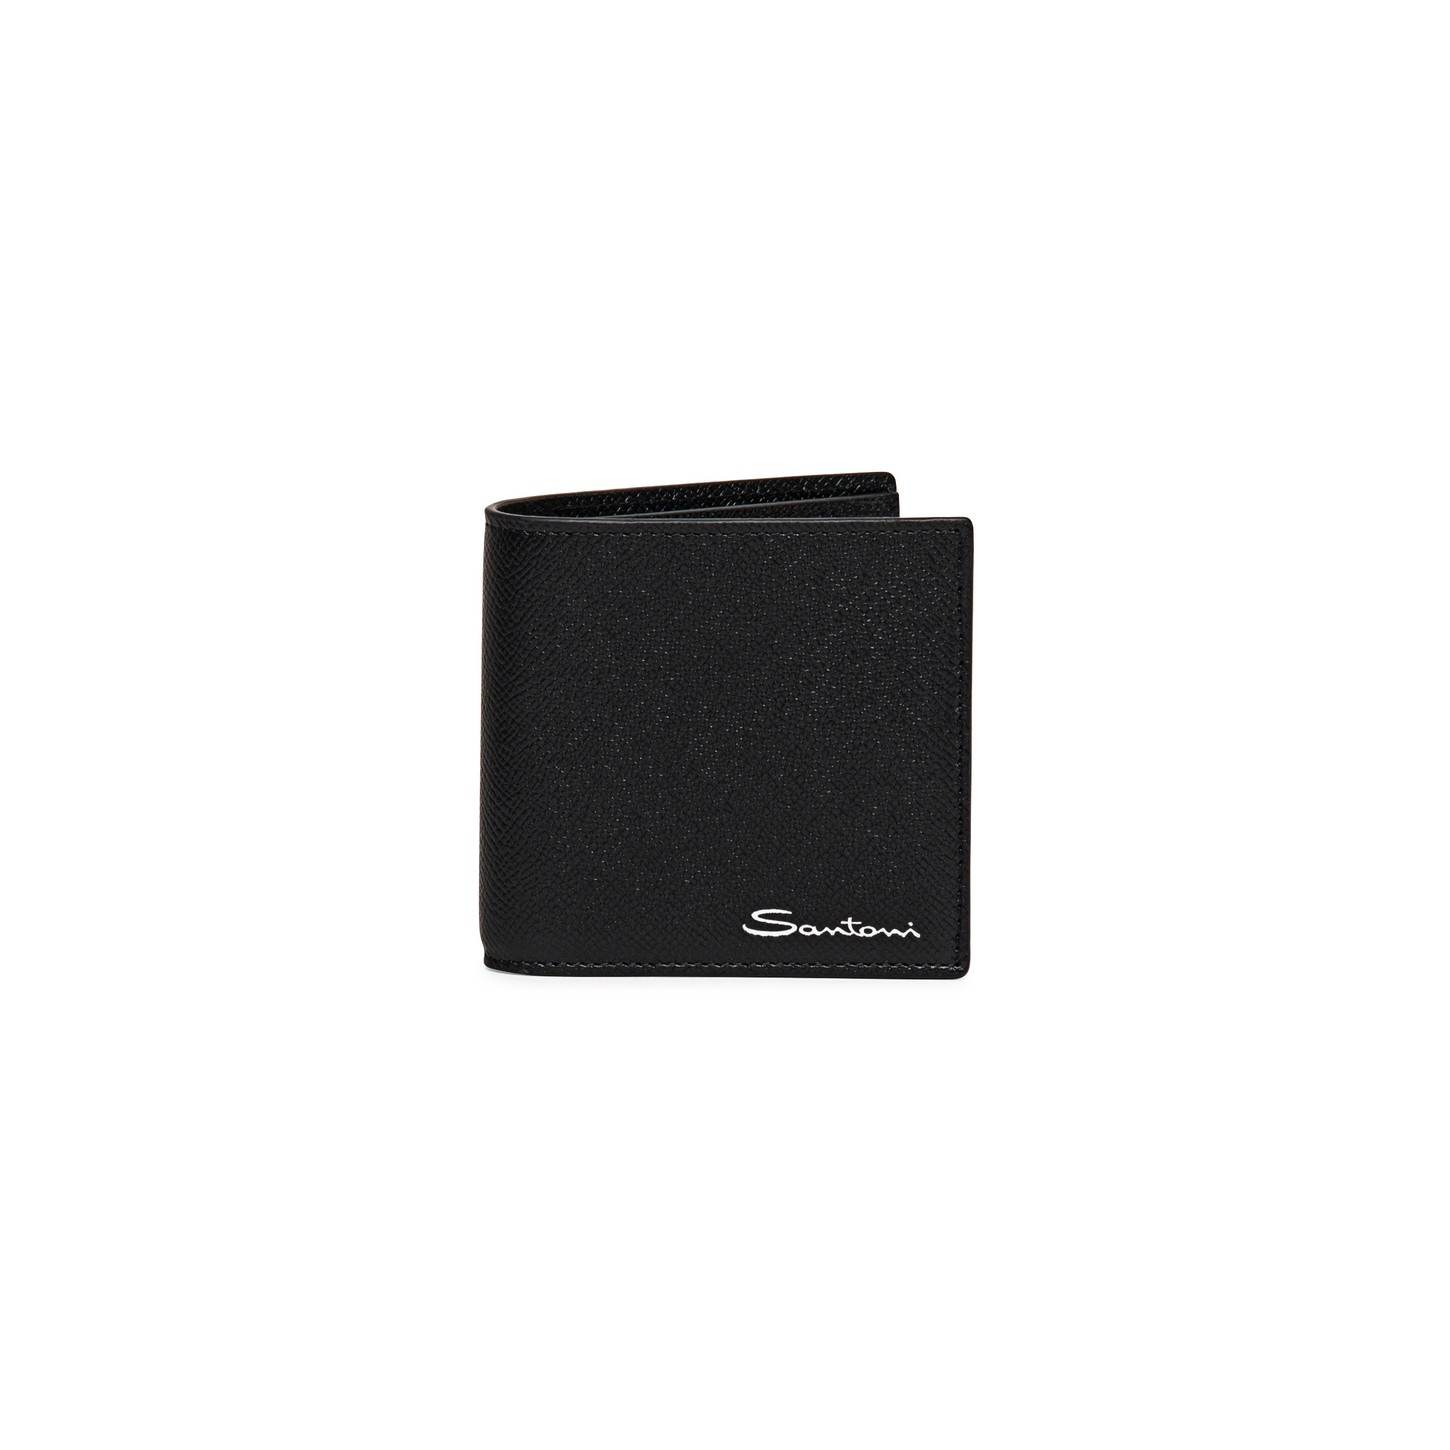 Black saffiano leather wallet - 1